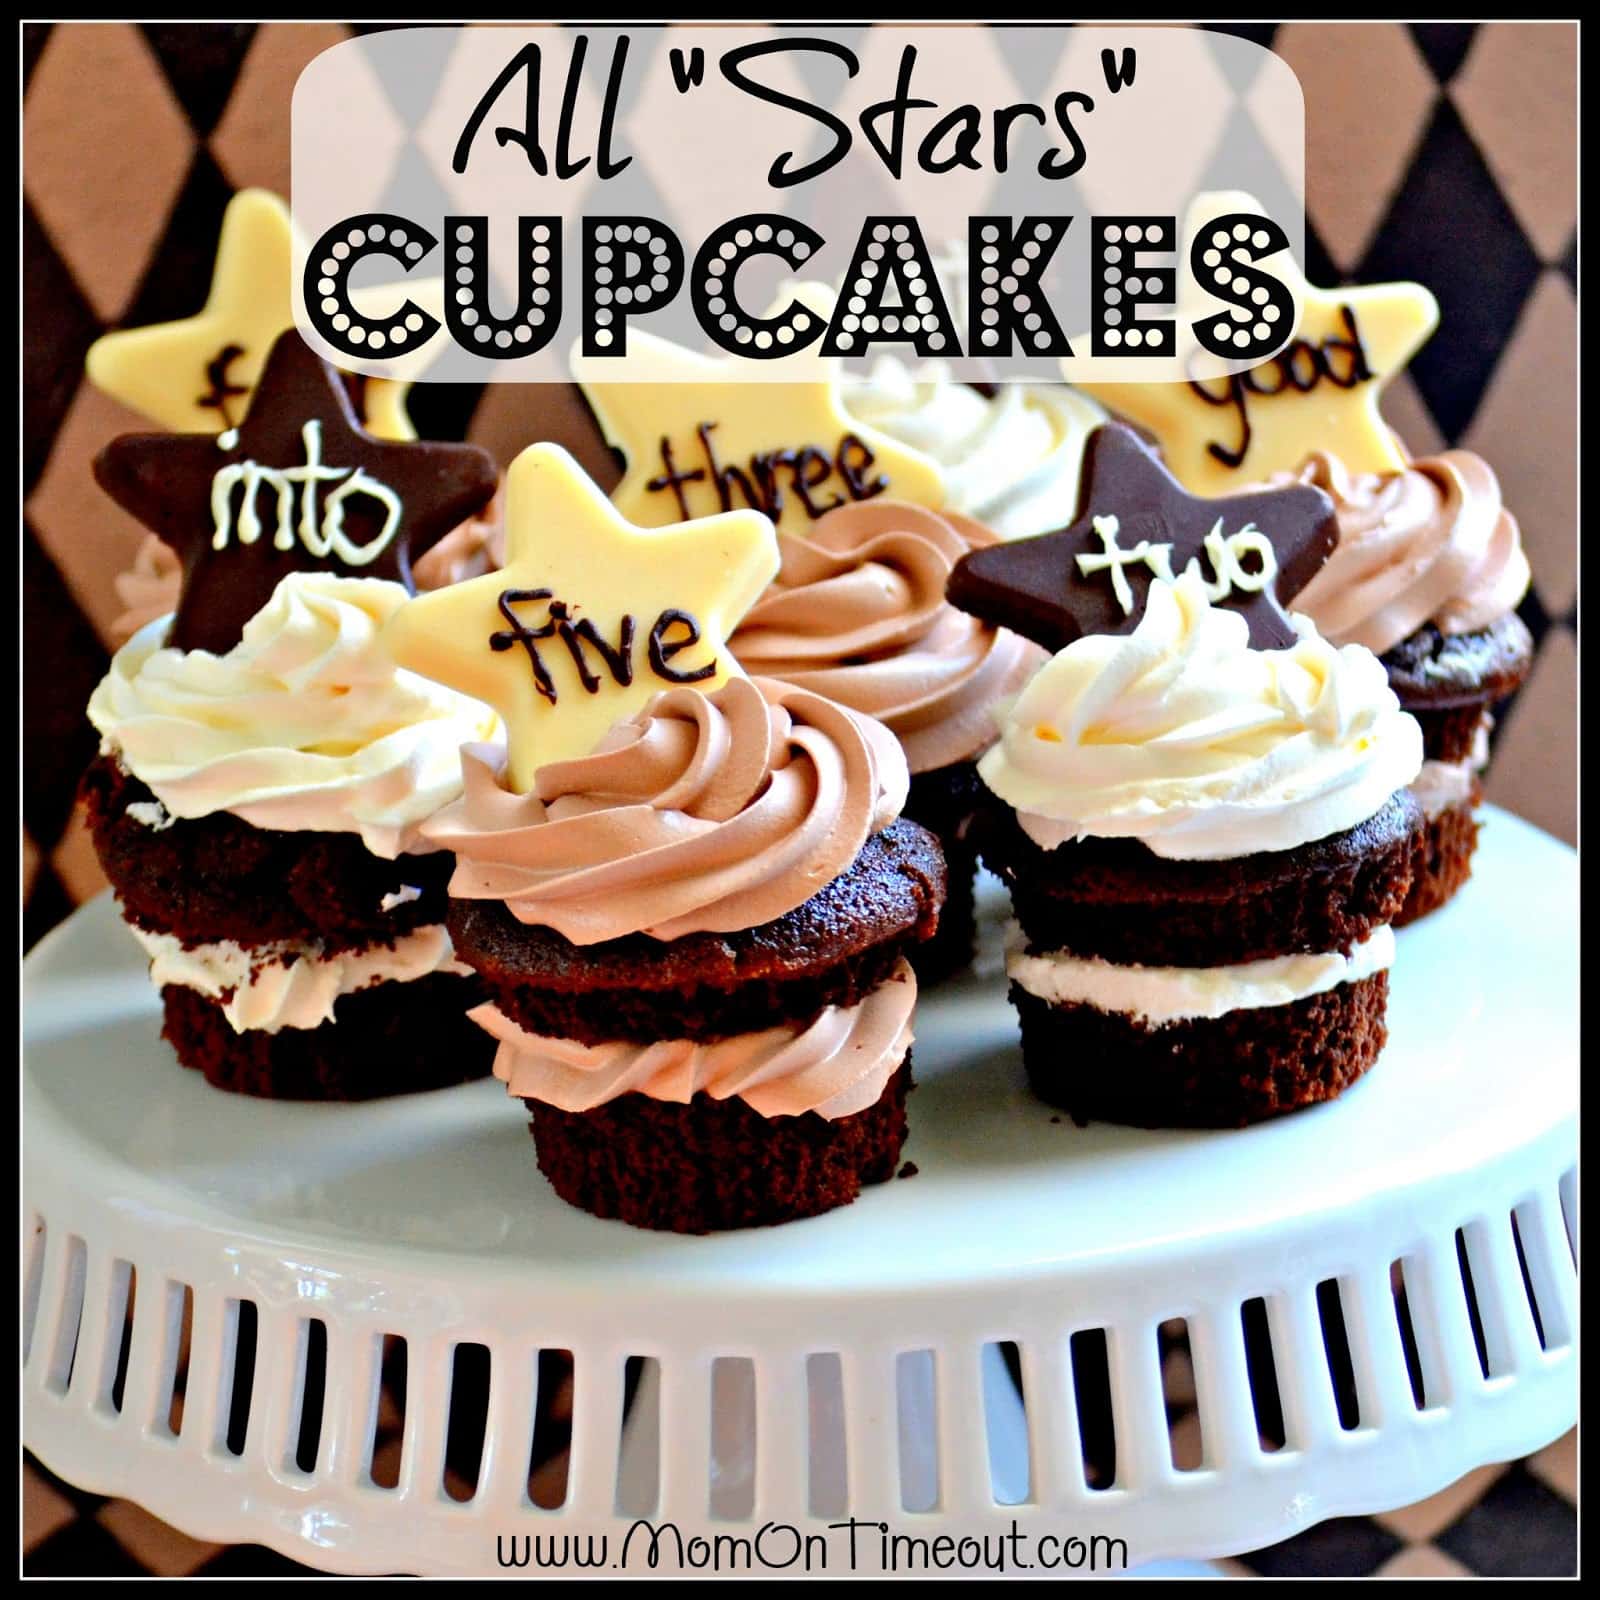 https://www.momontimeout.com/wp-content/uploads/2012/10/All-Stars-Cupcakes.jpg